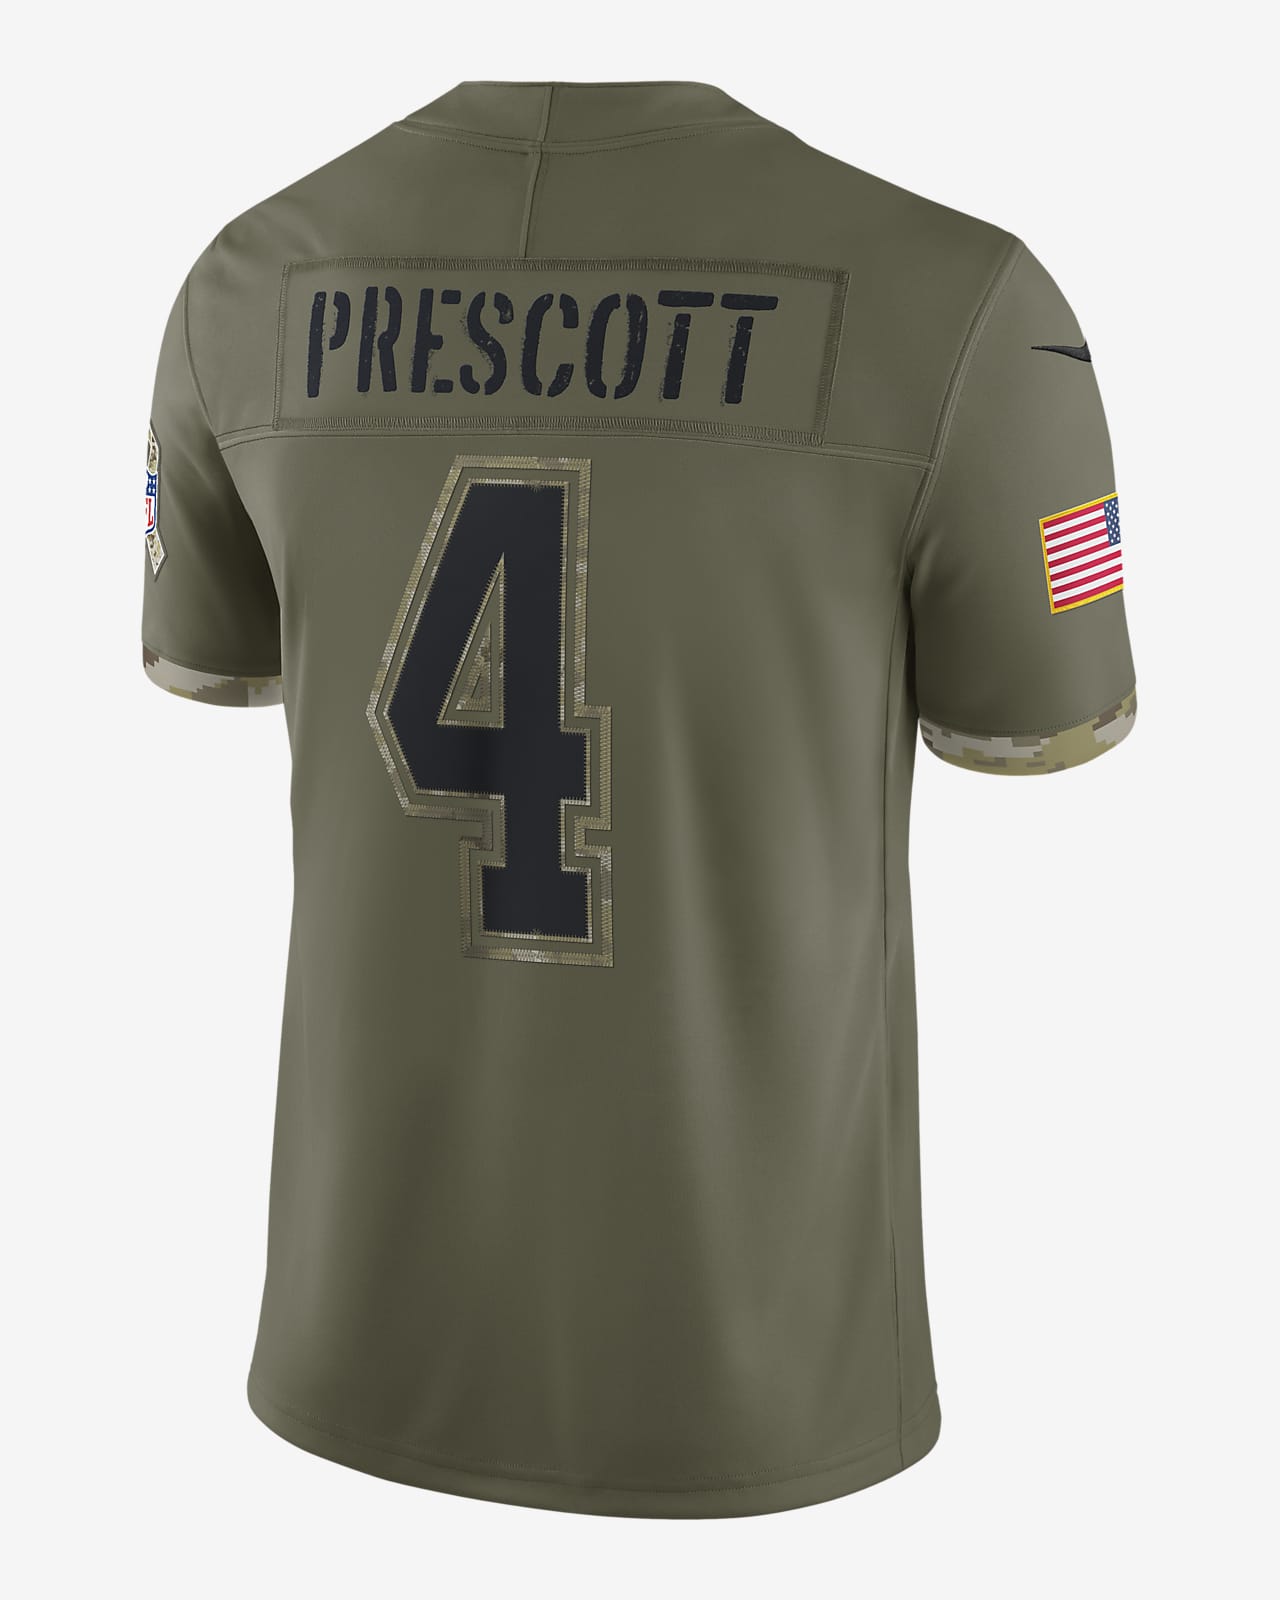 dak prescott salute to service jersey